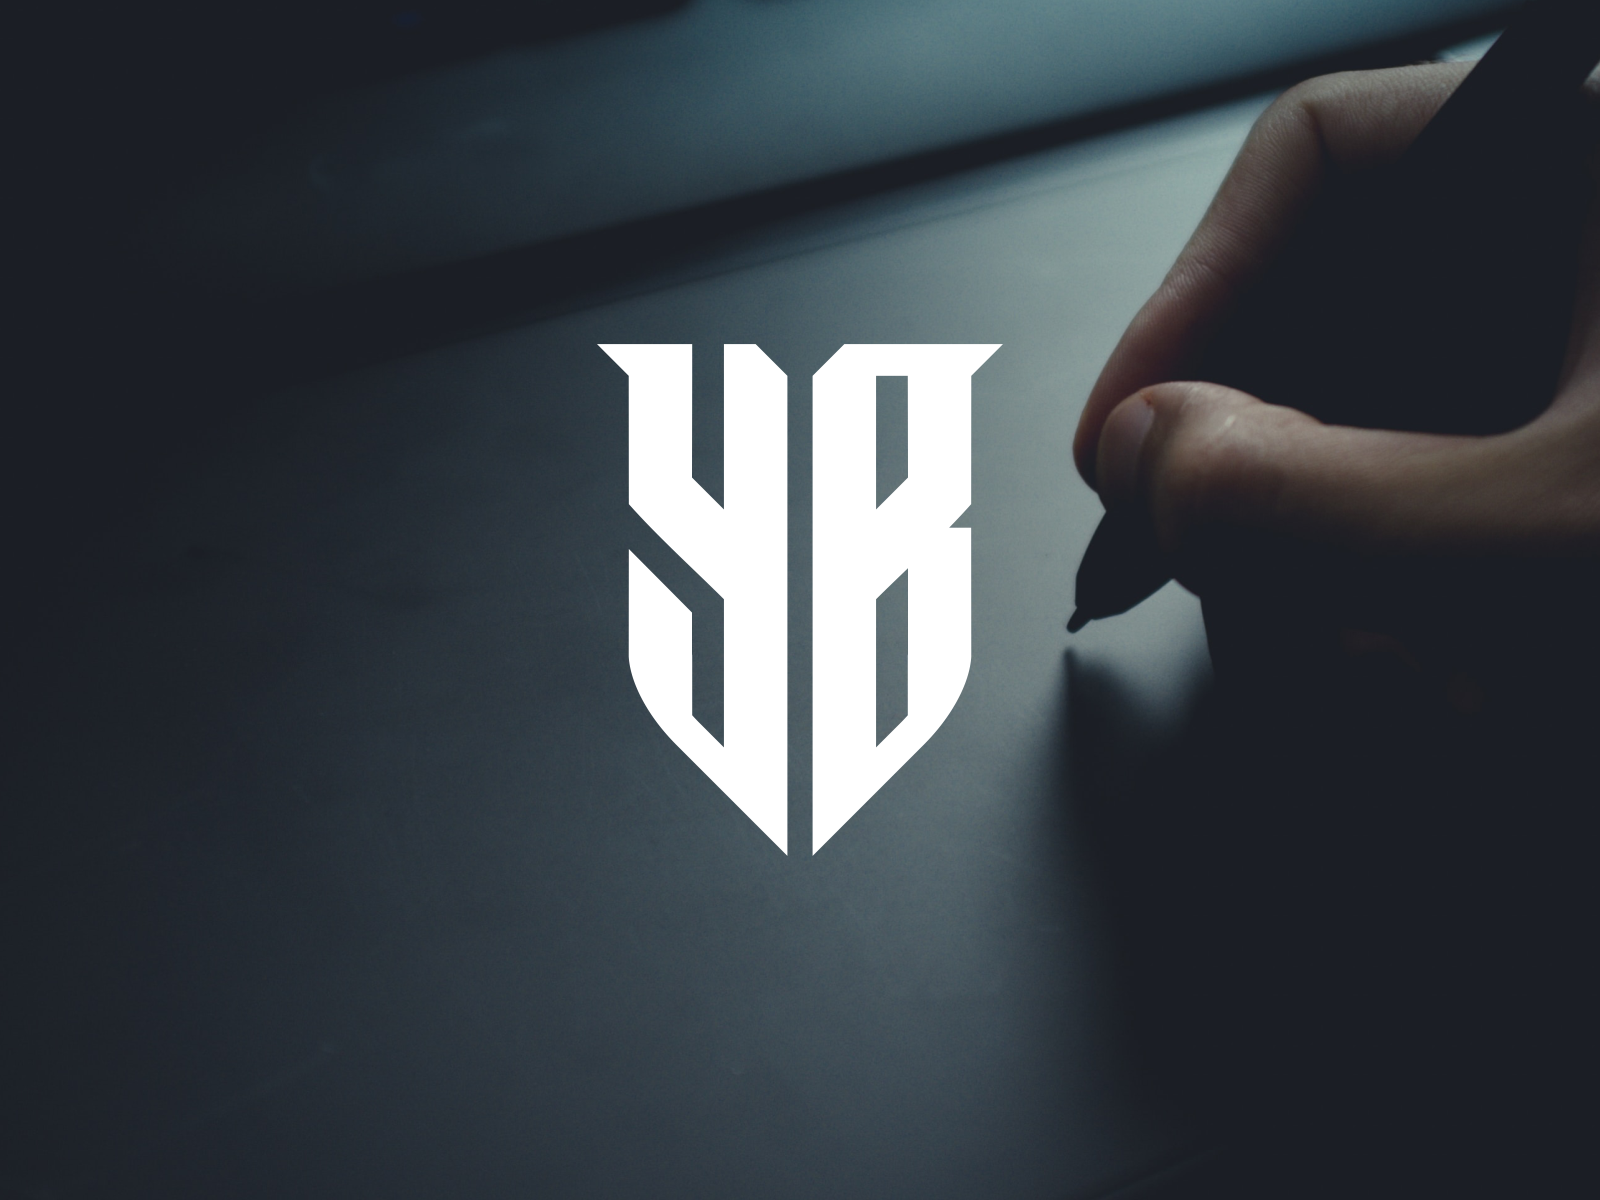 YB monogram by mwh_design on Dribbble